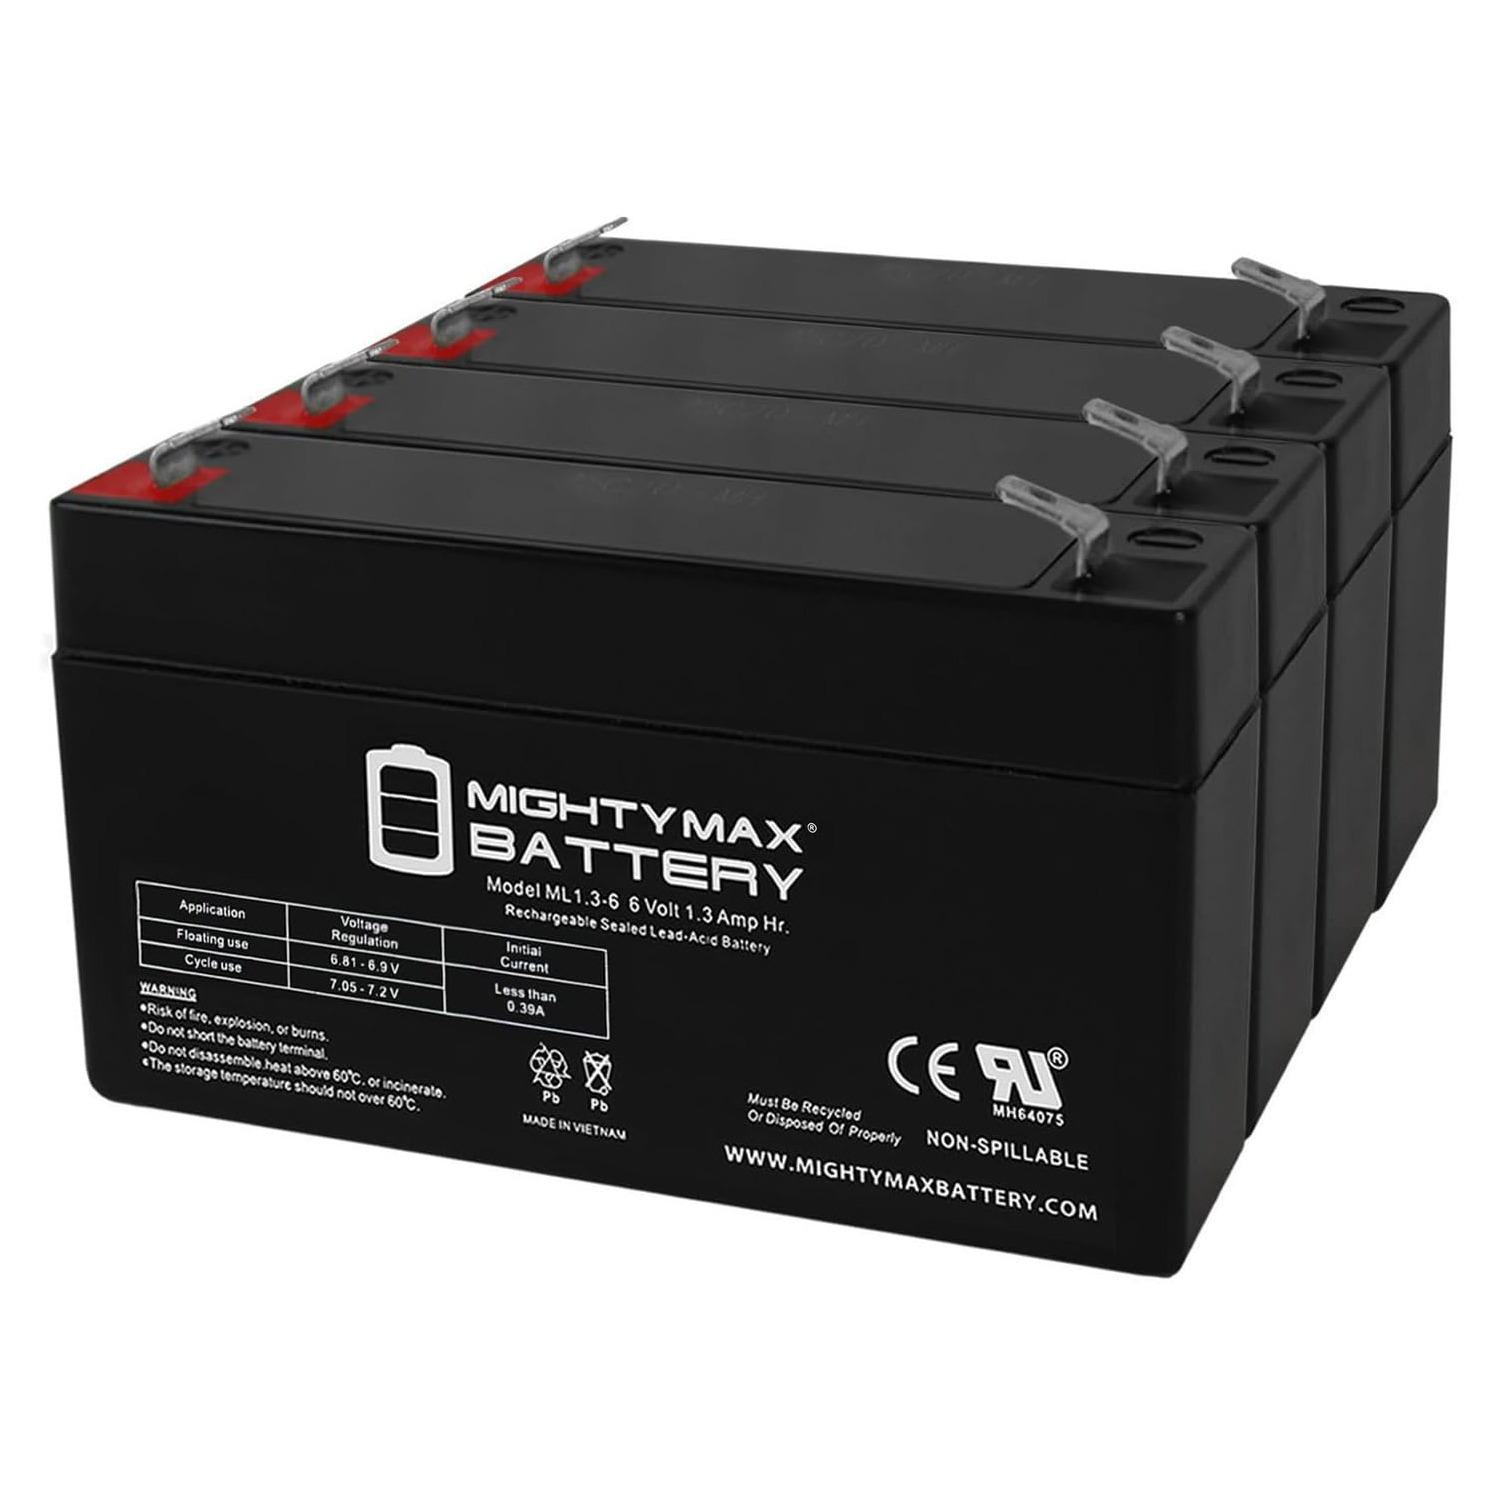 6V 1.3Ah Sonnenschein CR61.3 Emergency Light Battery - 4 Pack